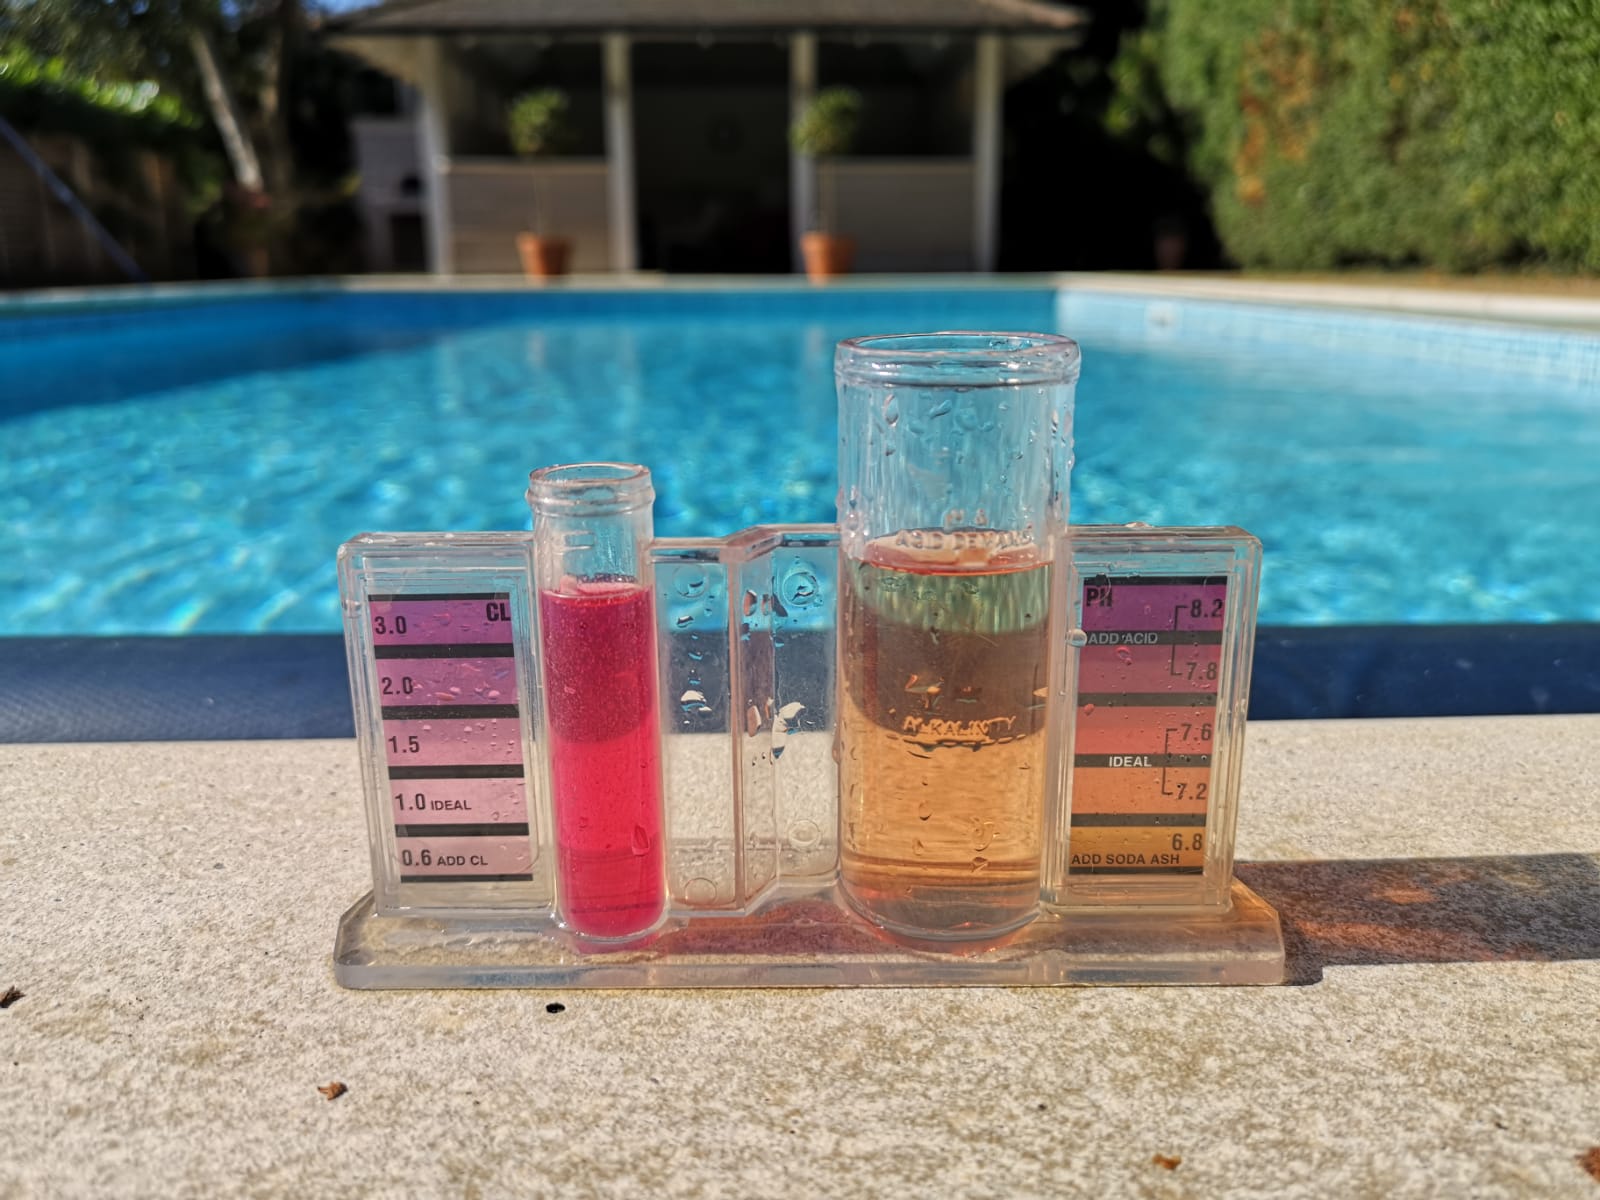 Water testing Rainbow Test Kit Comparitor